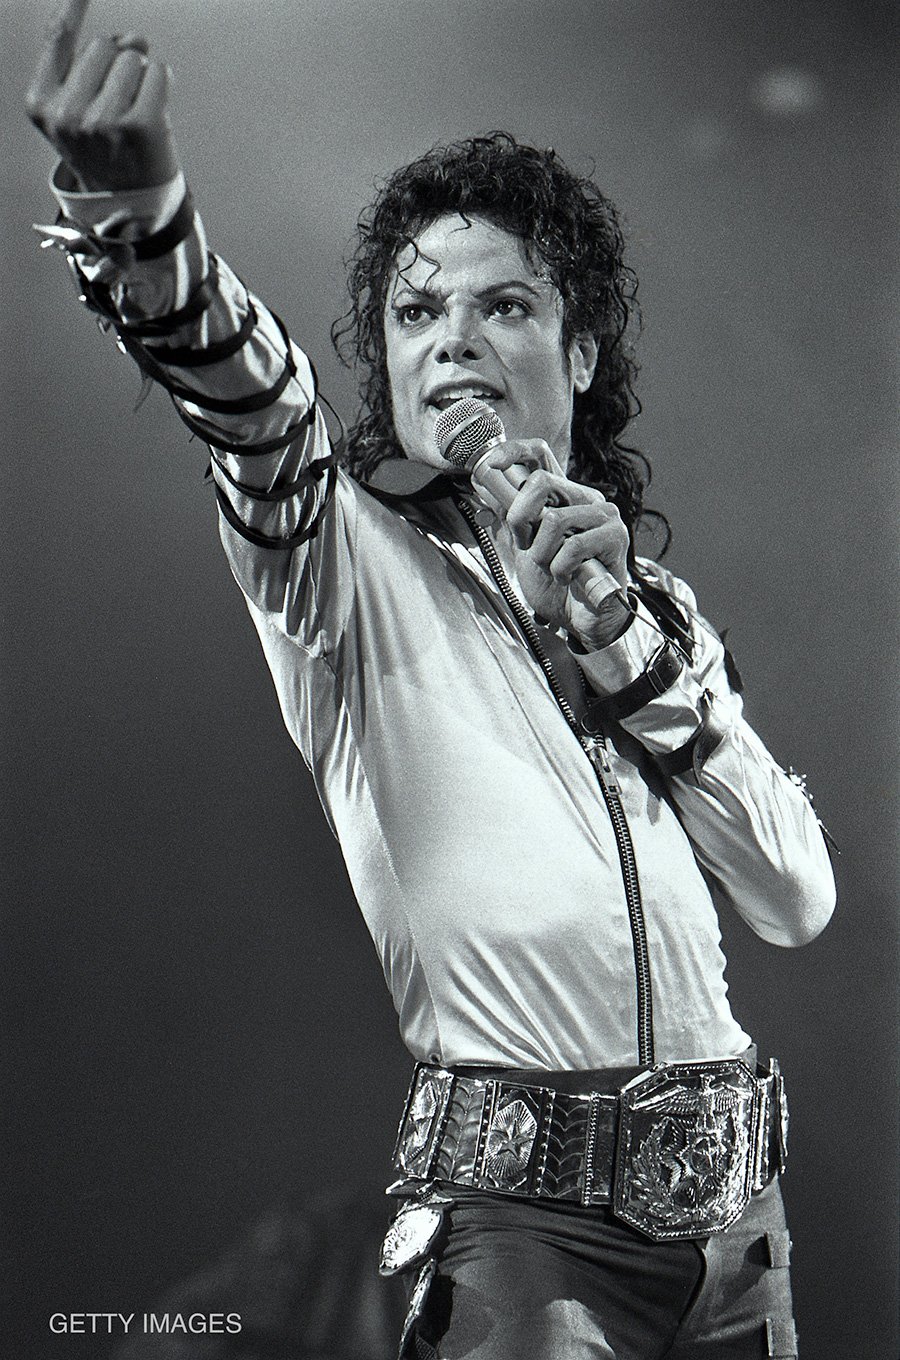 Michael Jackson performs concert in Denver, Colorado on Bad Tour March 24, 1988